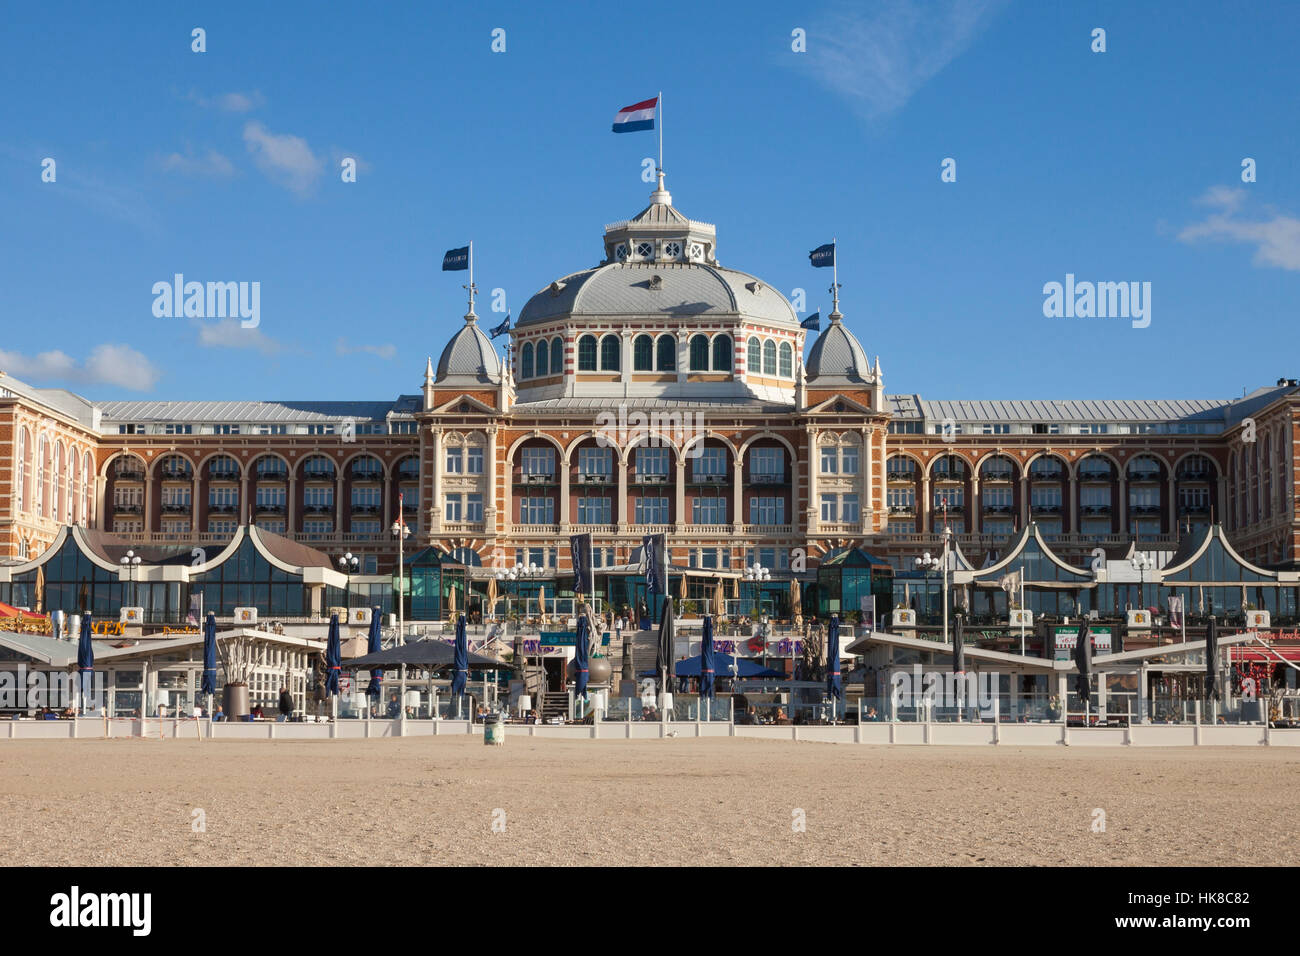 Spa hotel on beach, Scheveningen, The Hague, Holland, Netherlands Stock Photo